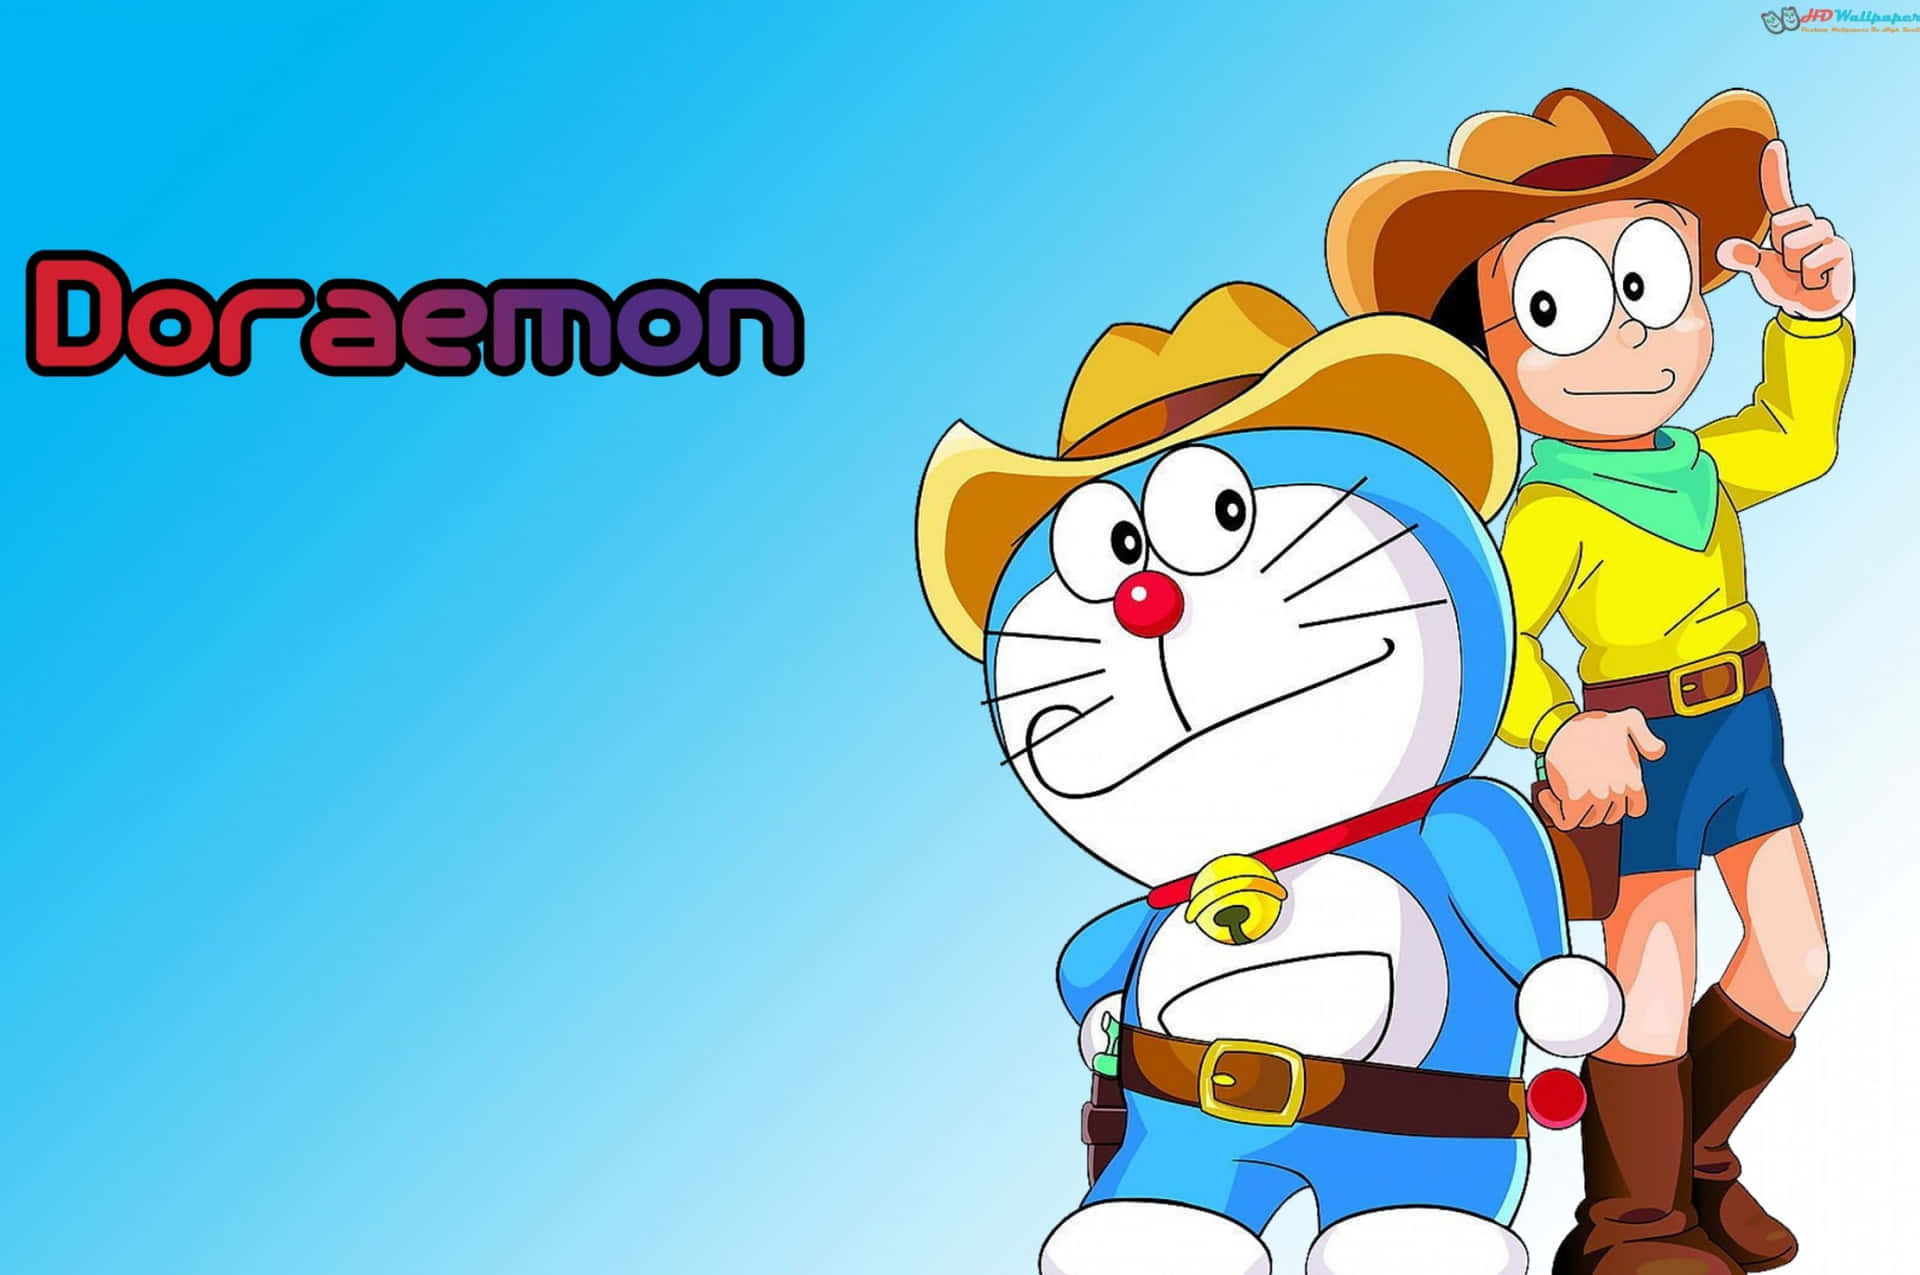 Doraemon enjoying food with his friends